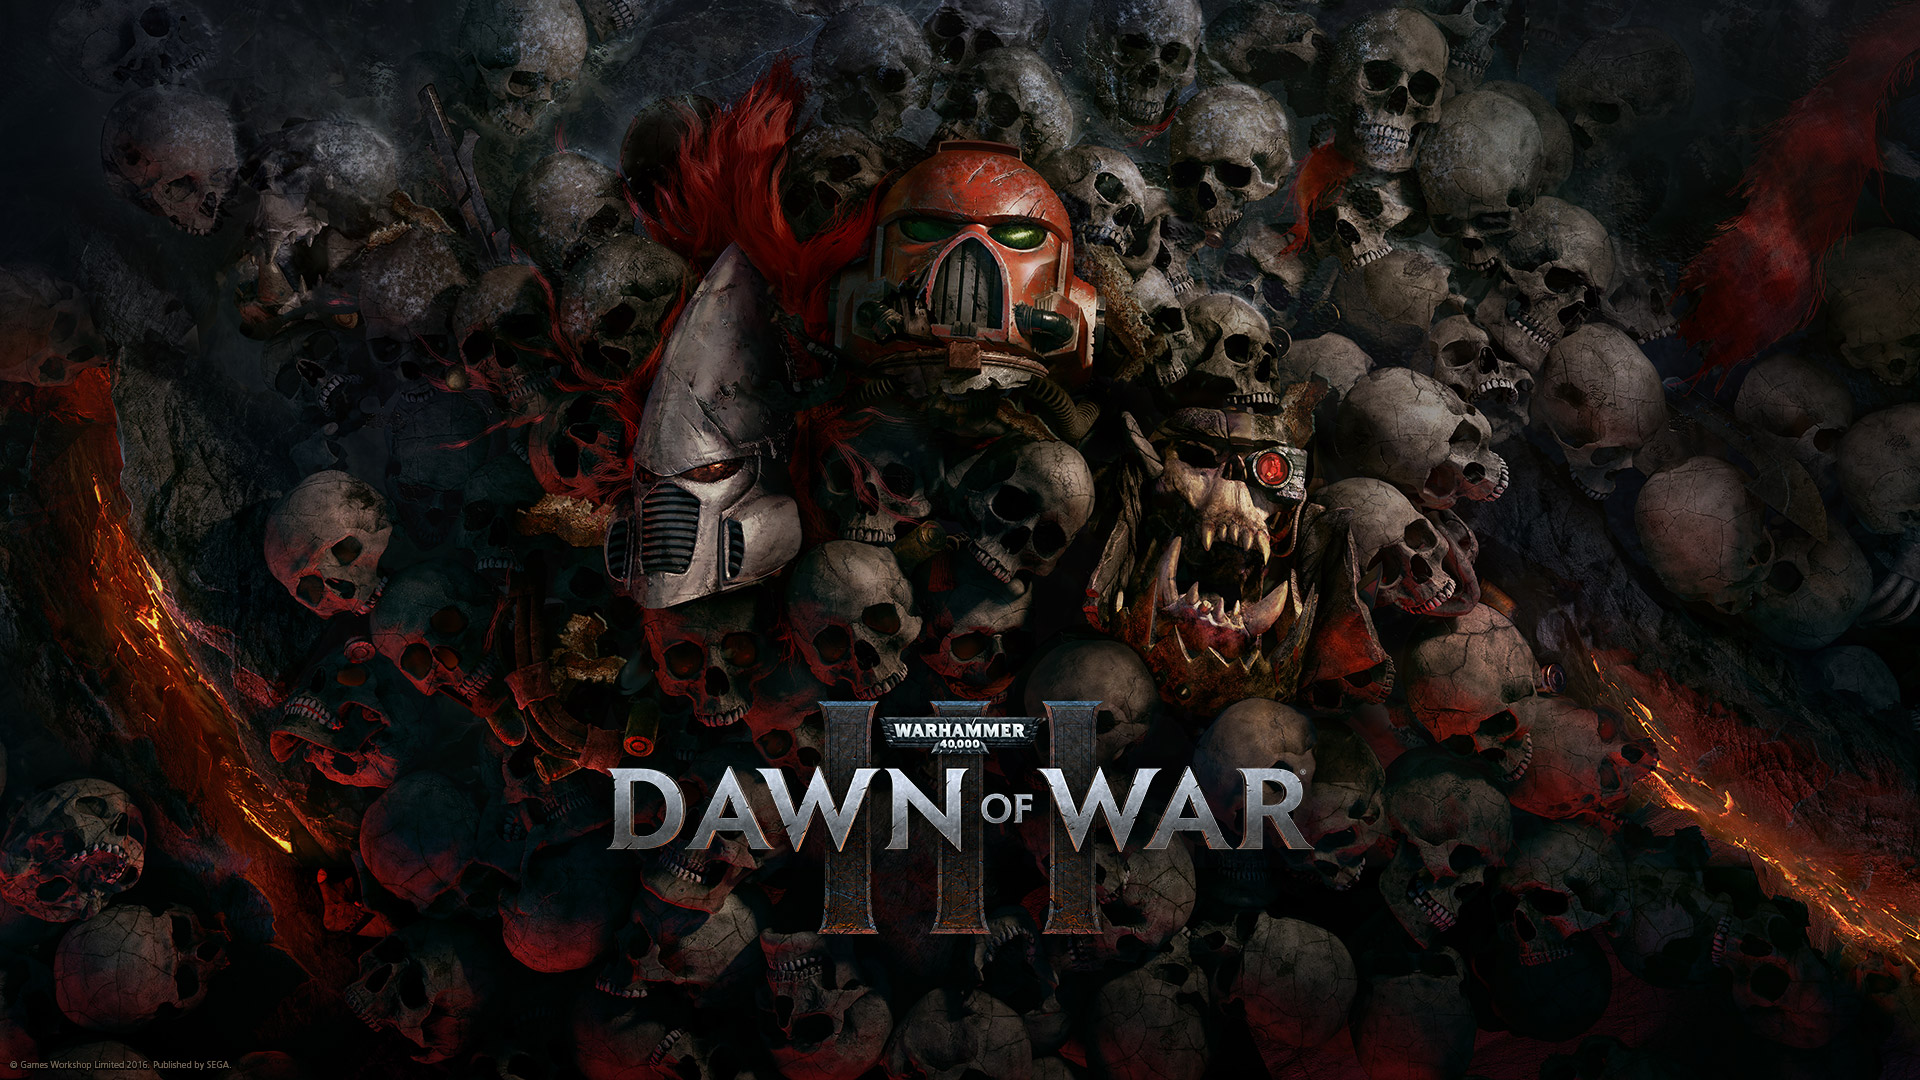 mira-video-introduccion-dawn-of-war-iii-frikigamers.com